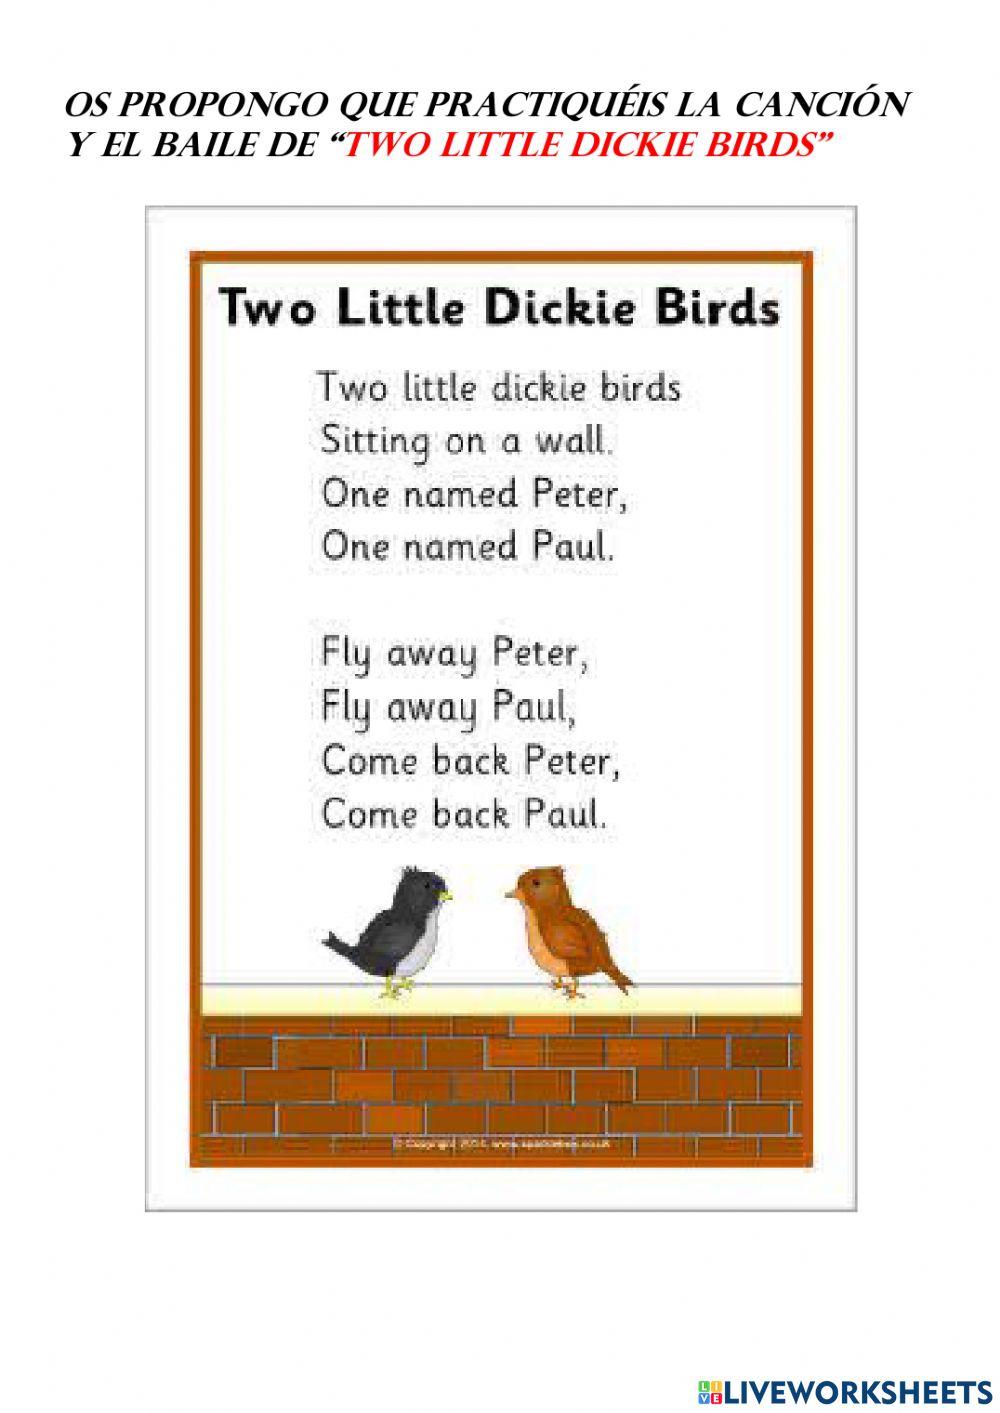 Two little dickie birds